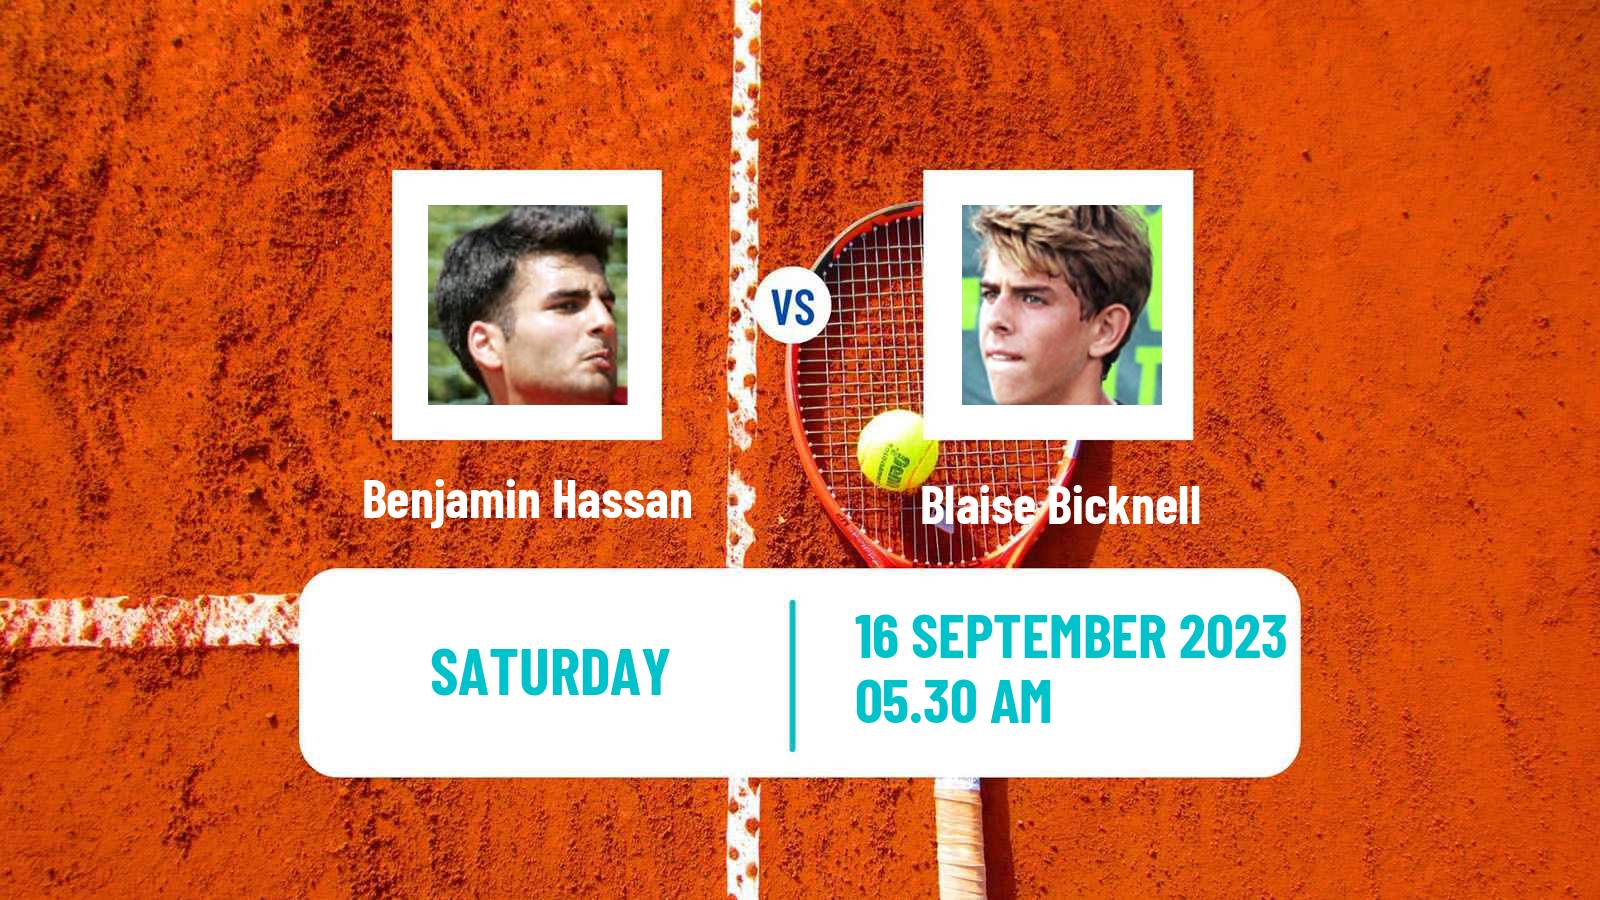 Tennis Davis Cup World Group II Benjamin Hassan - Blaise Bicknell